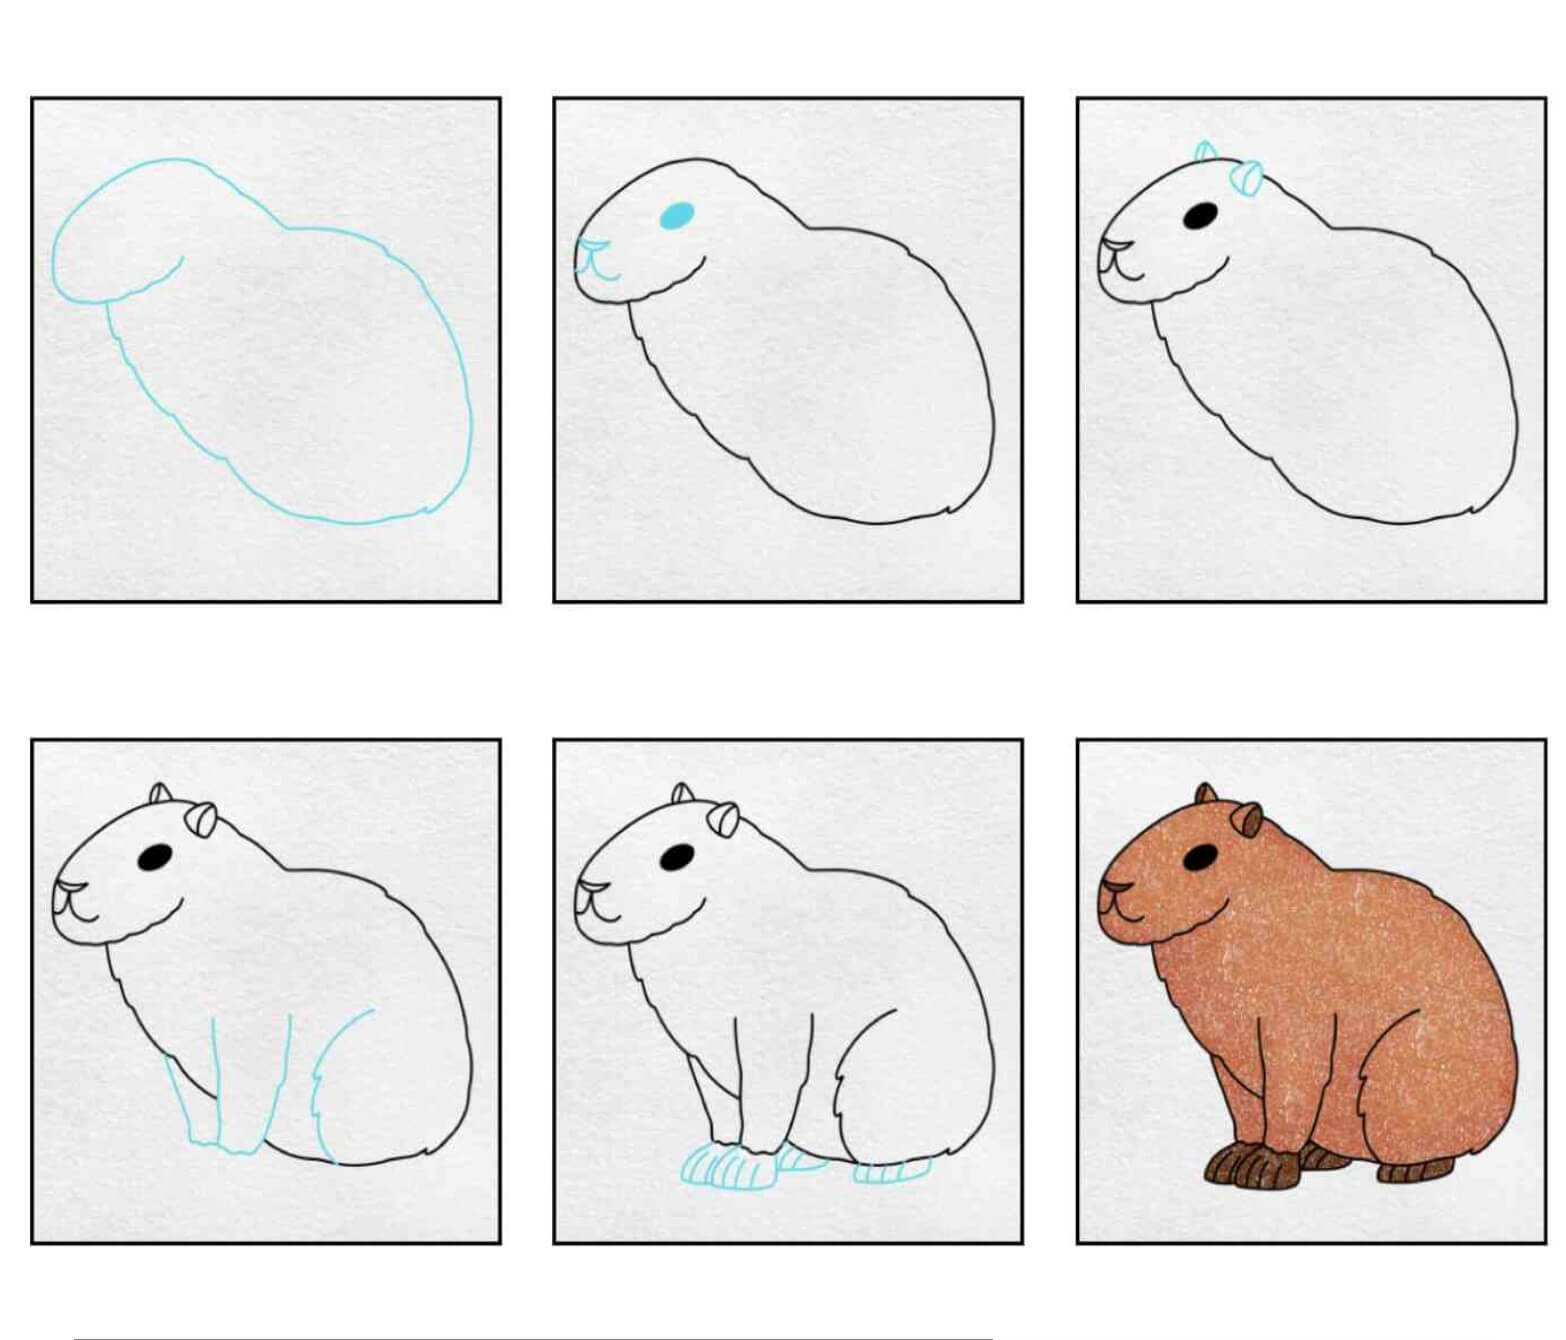 Capybara idea (6) Drawing Ideas